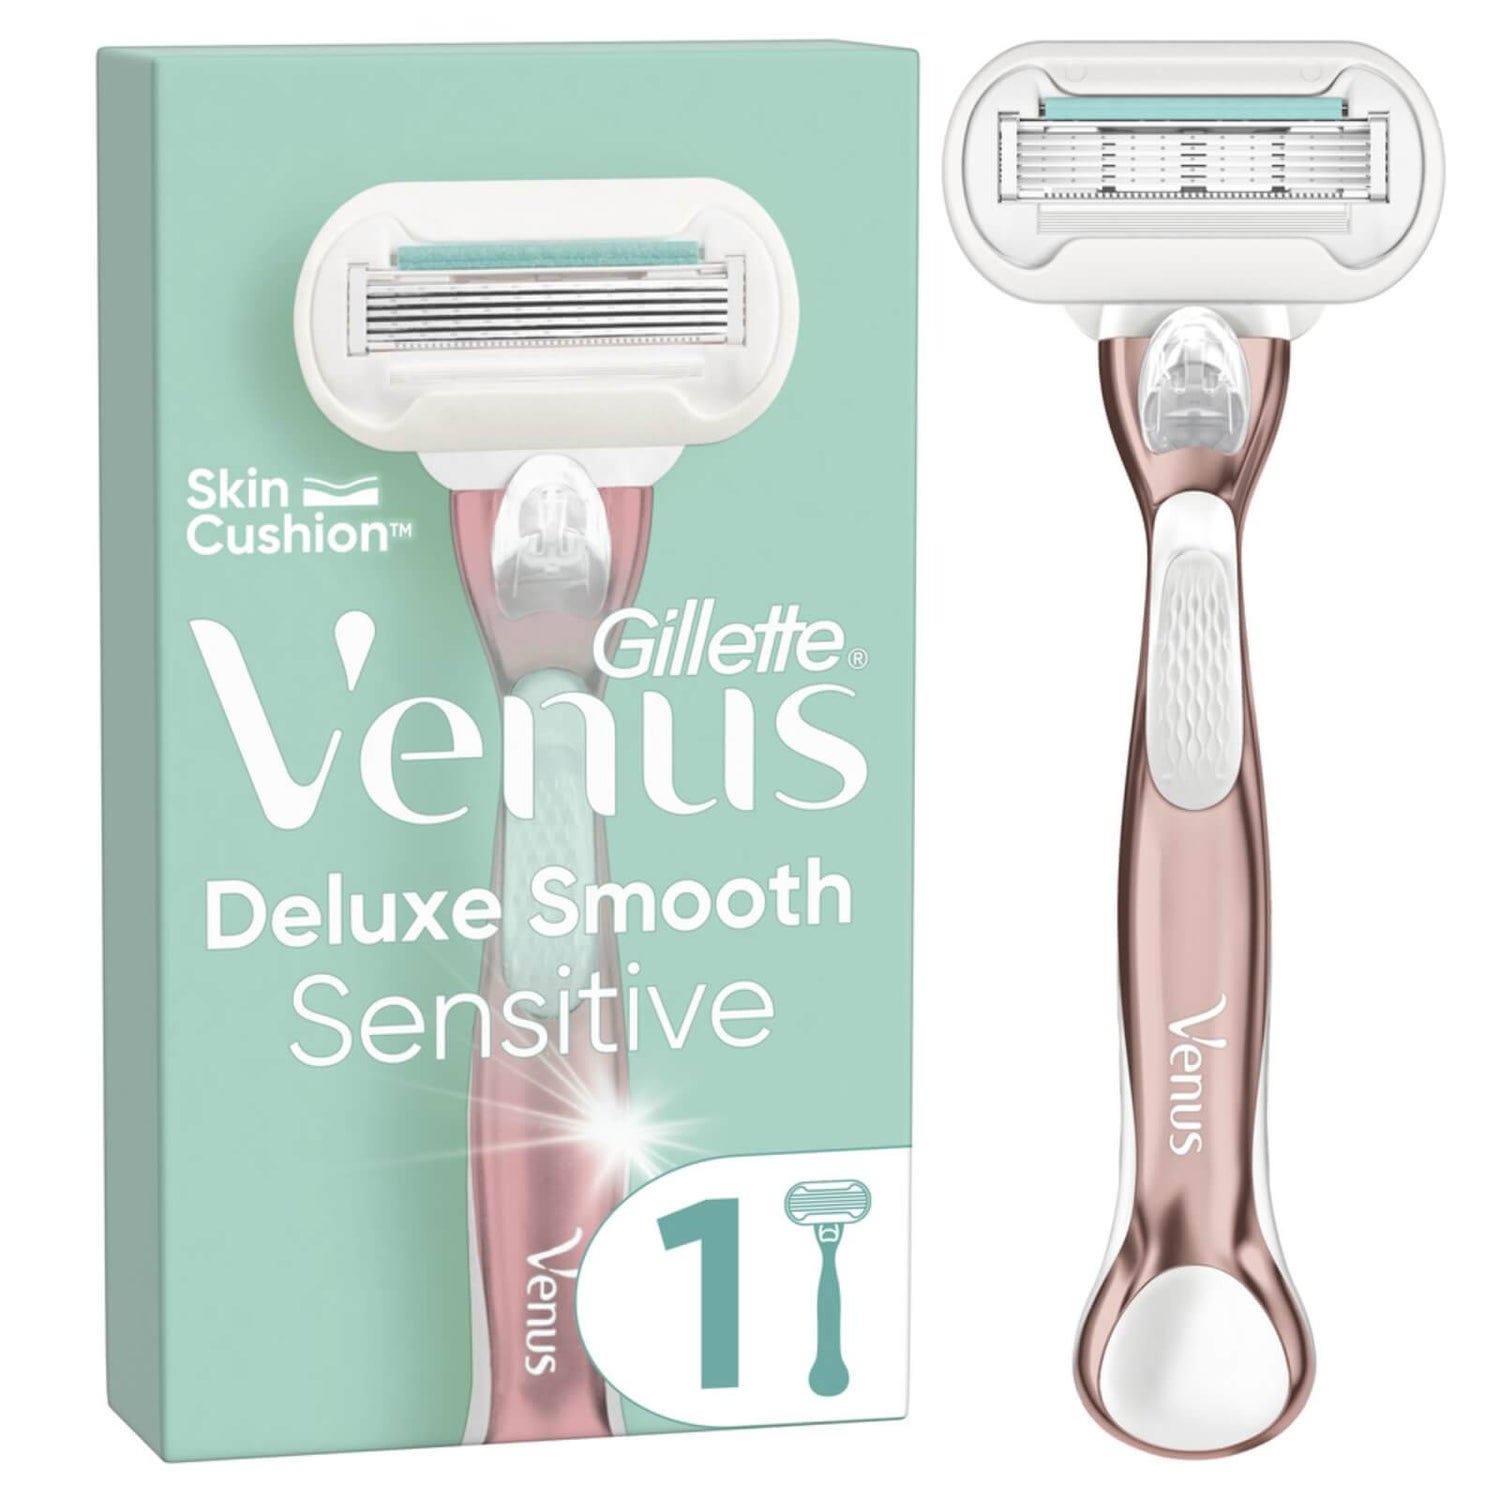 Venus Deluxe Smooth Sensitive Rose Gold Razor